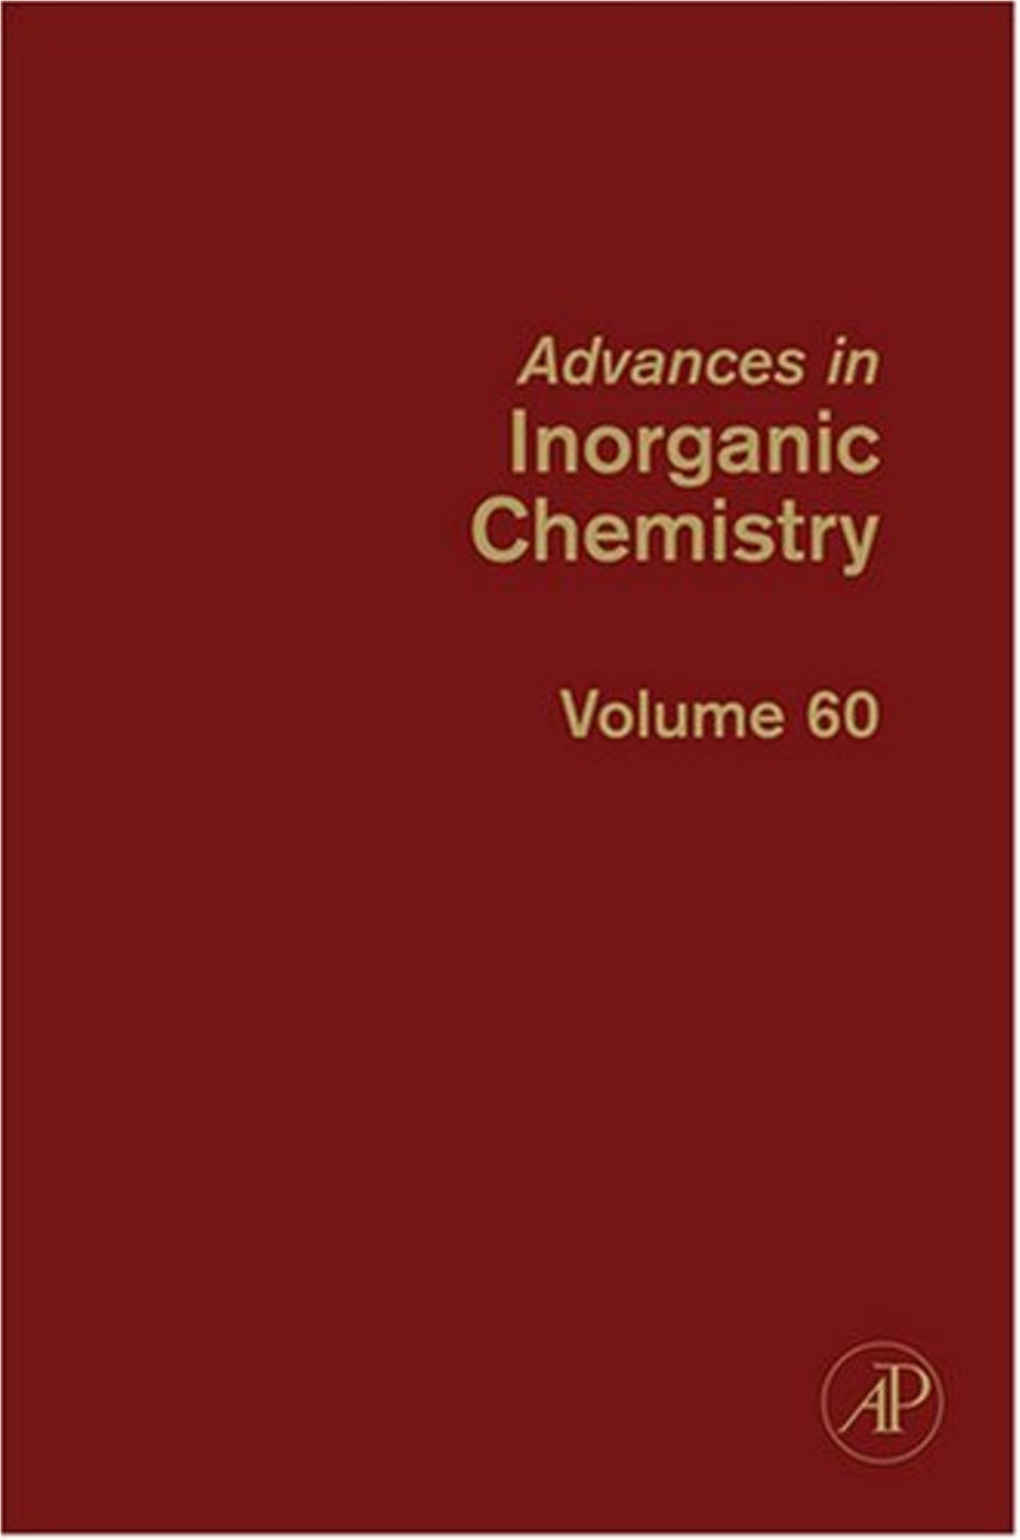 Advances-In-Inorganic-Chemistry-60-2008.Pdf